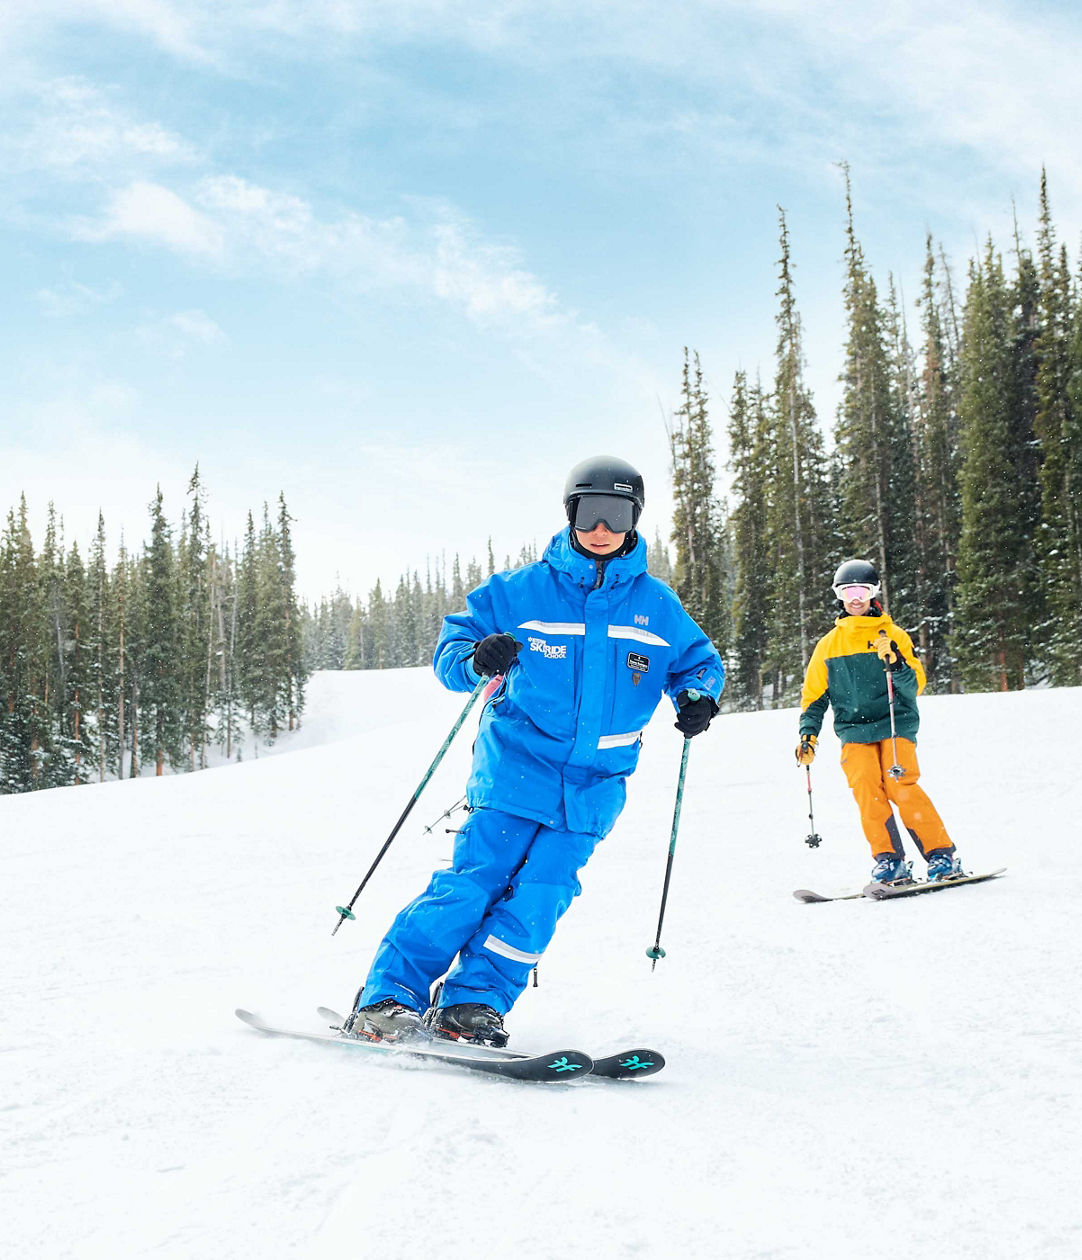 Keystone Skiing & Snowboarding Information